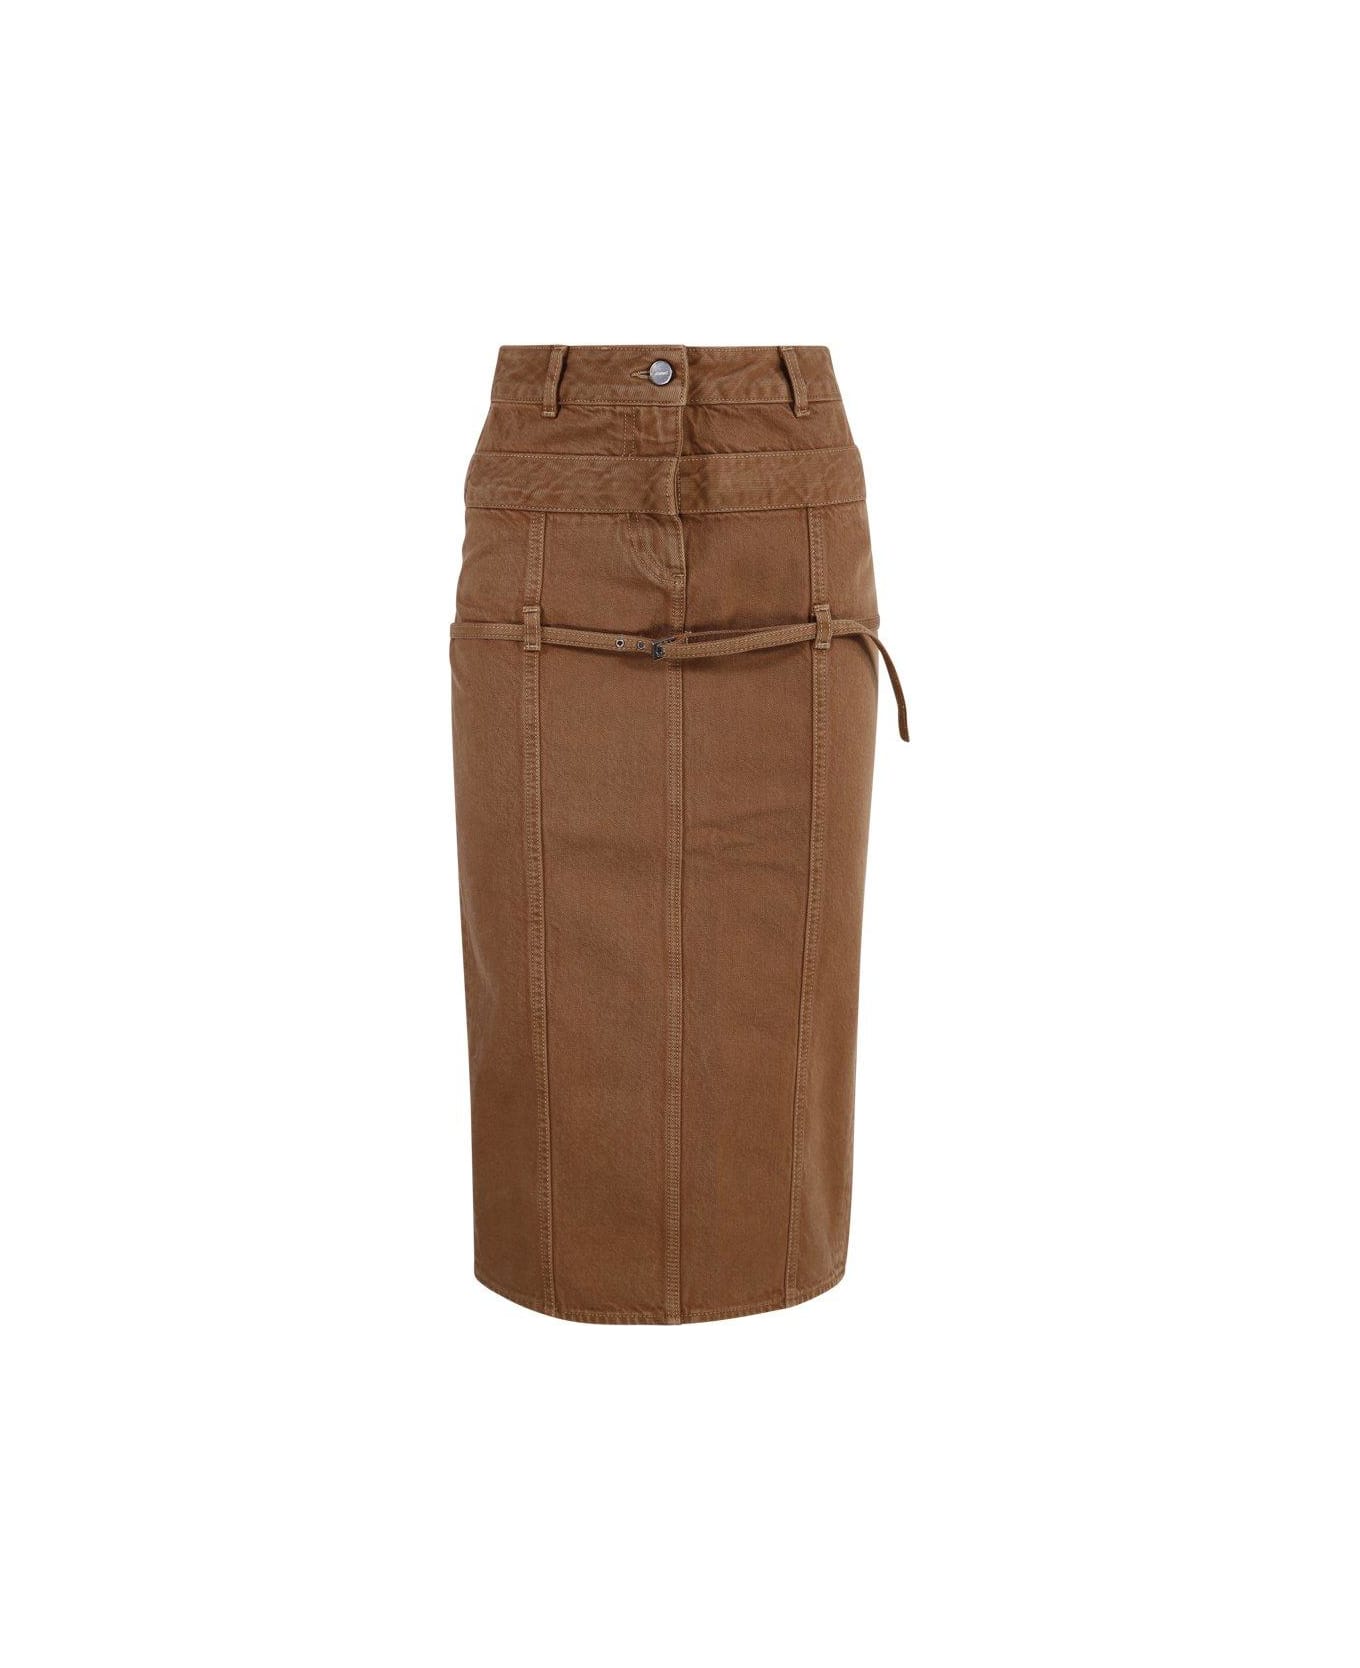 Jacquemus Denim Back-slit Skirt - A Camel Beige スカート